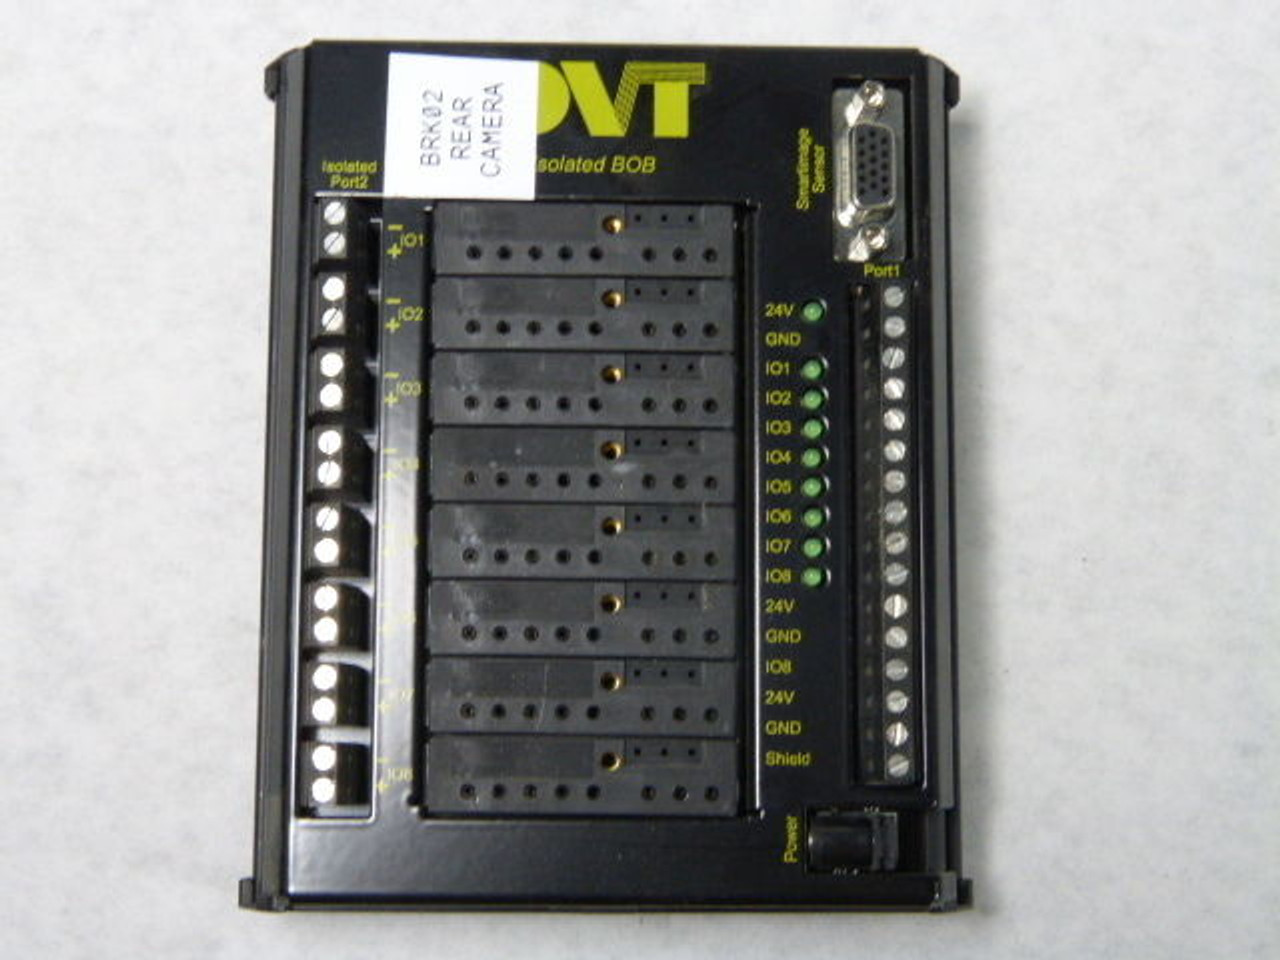 DVT BOB Isolated Control Board 24V USED